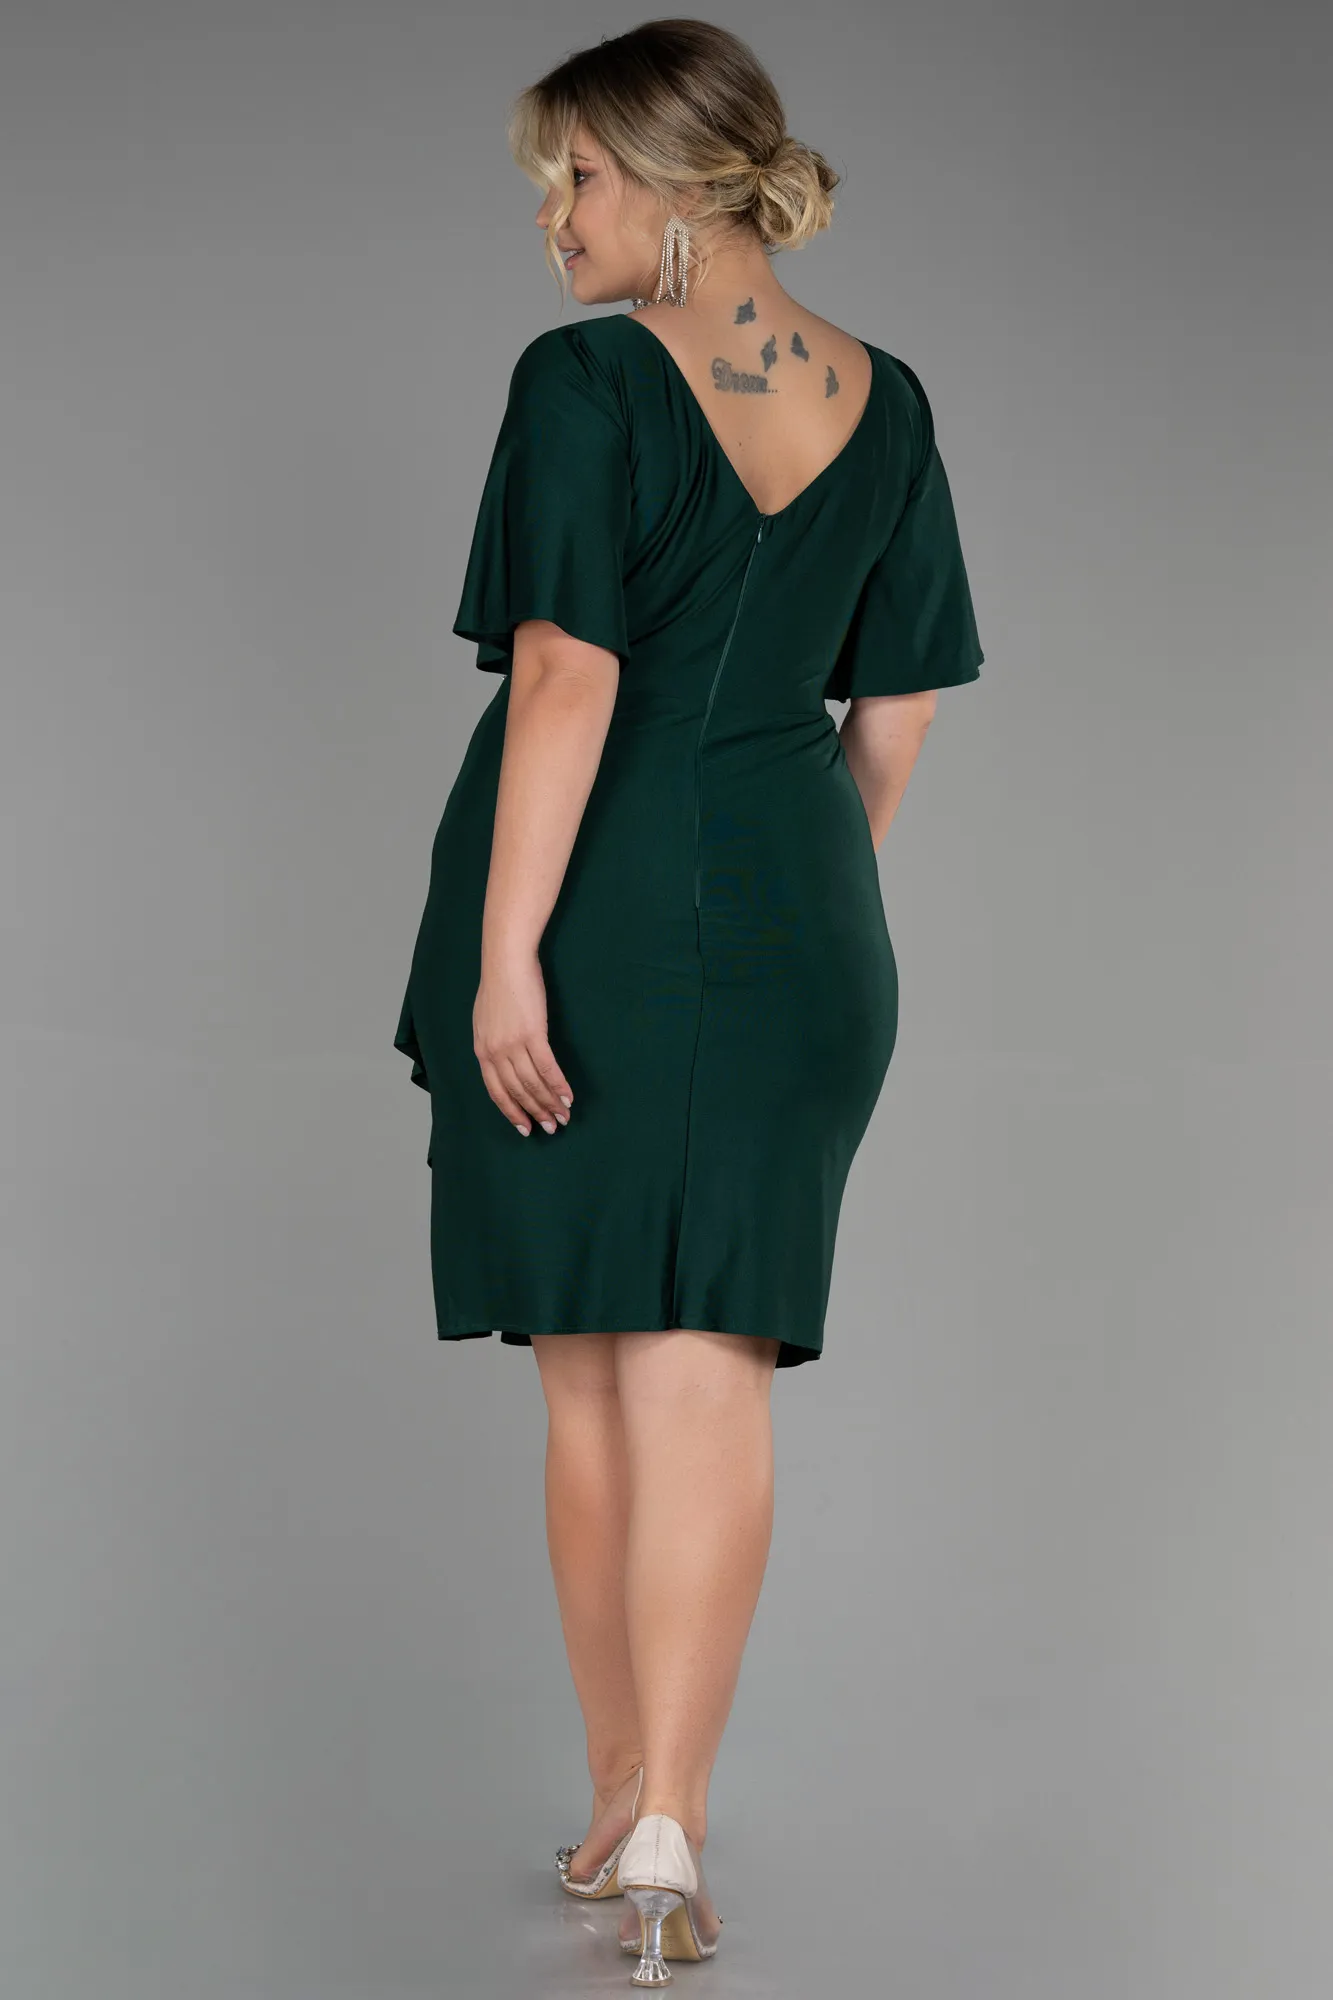 Emerald Green-Short Plus Size Evening Dress ABK1824